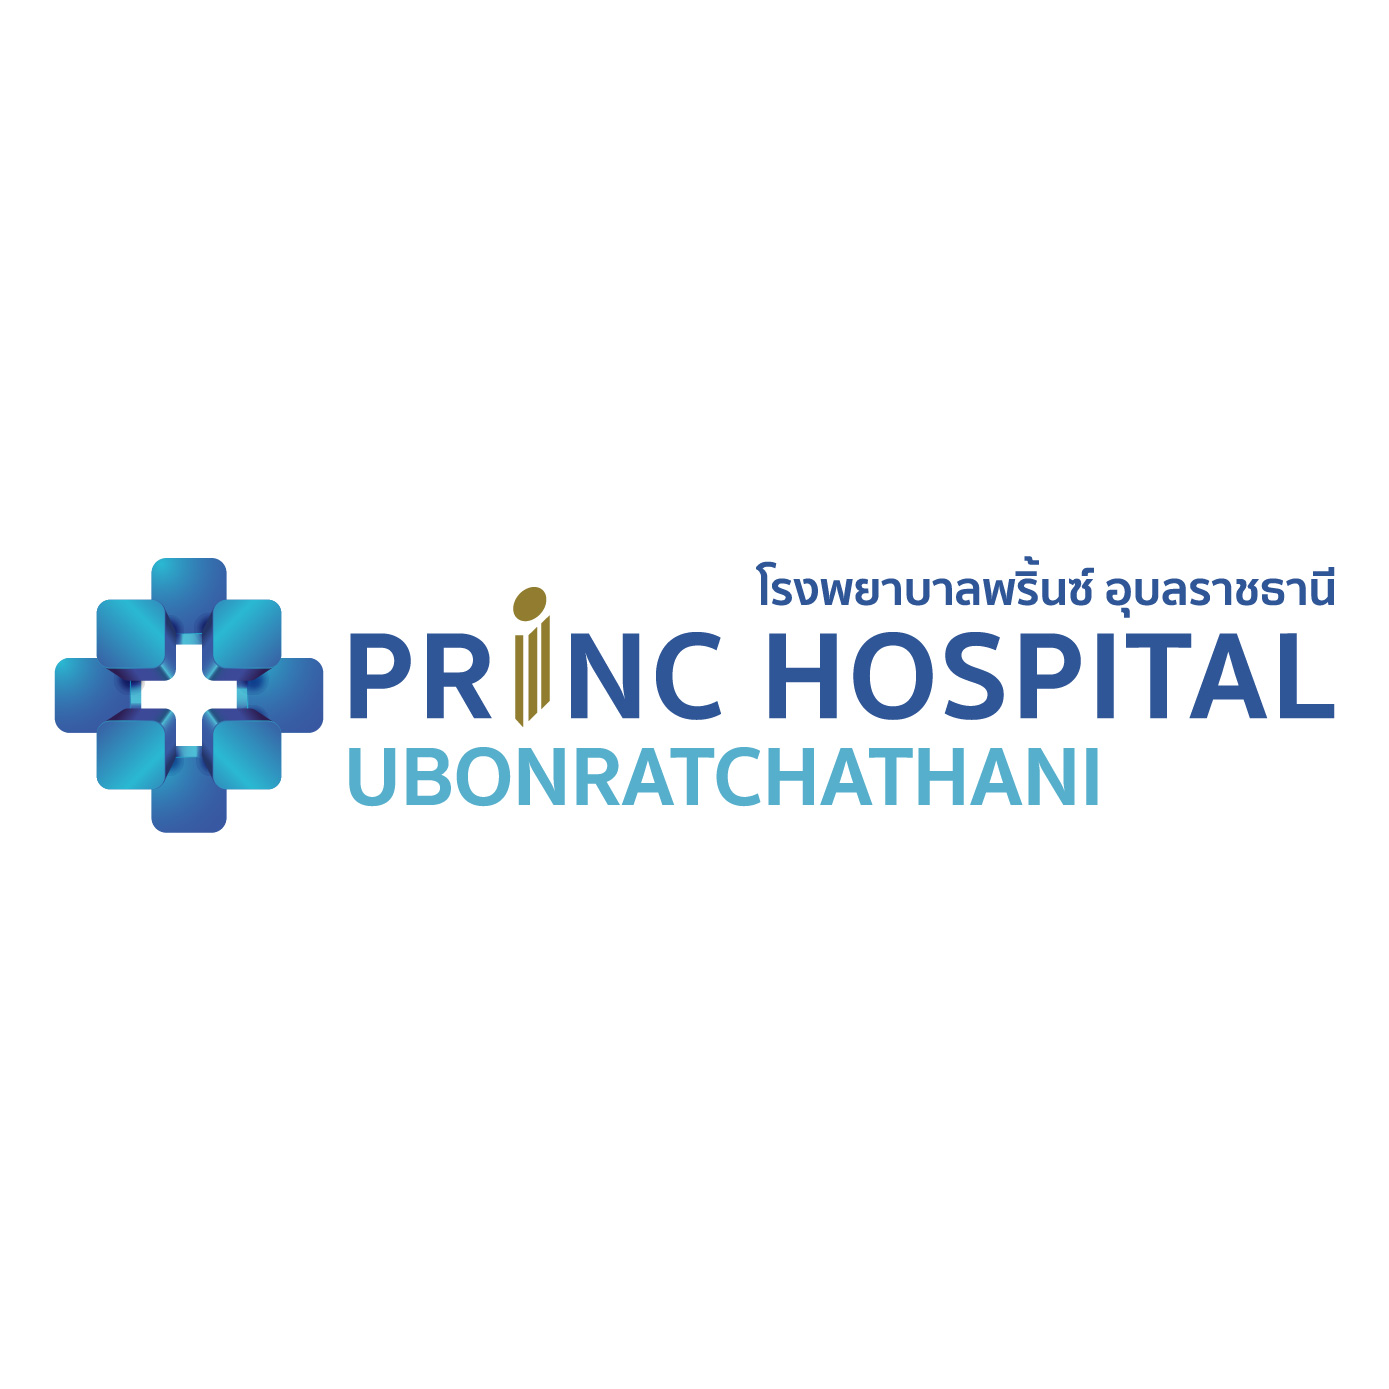 Princ Hospital Ubonratchathani 01